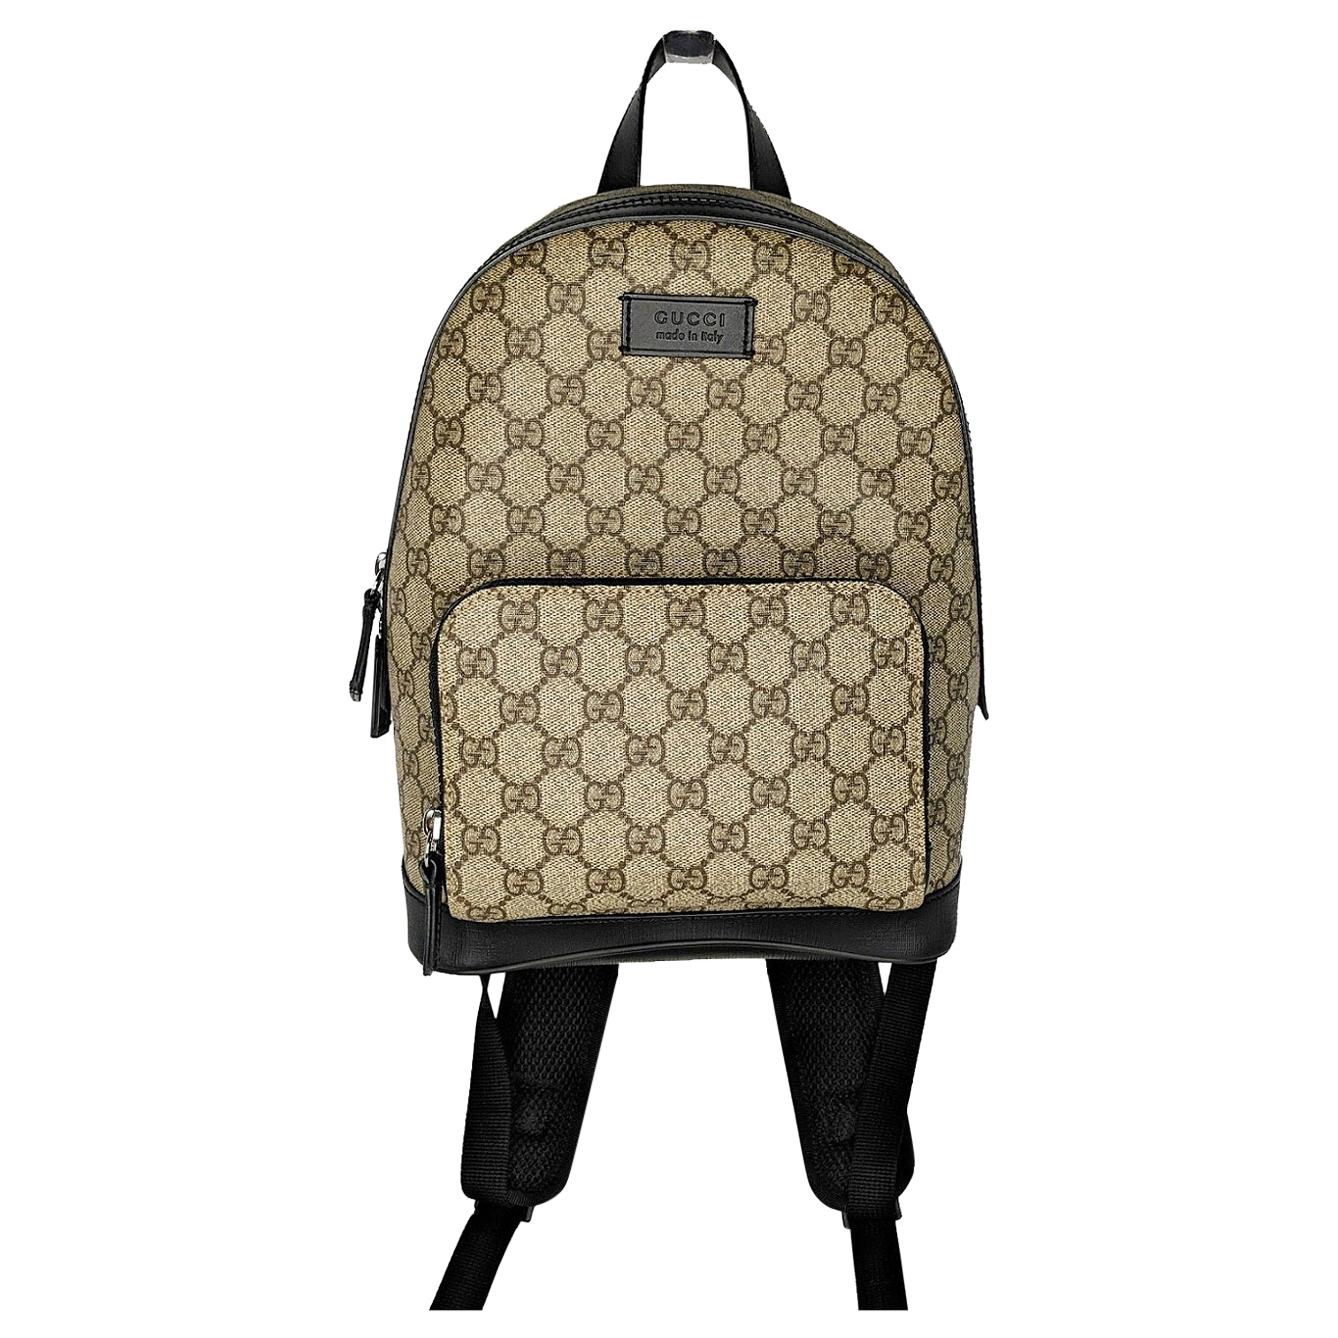 AUTHENTIC Gucci GG Supreme Monogram Large Eden Day Backpack Black